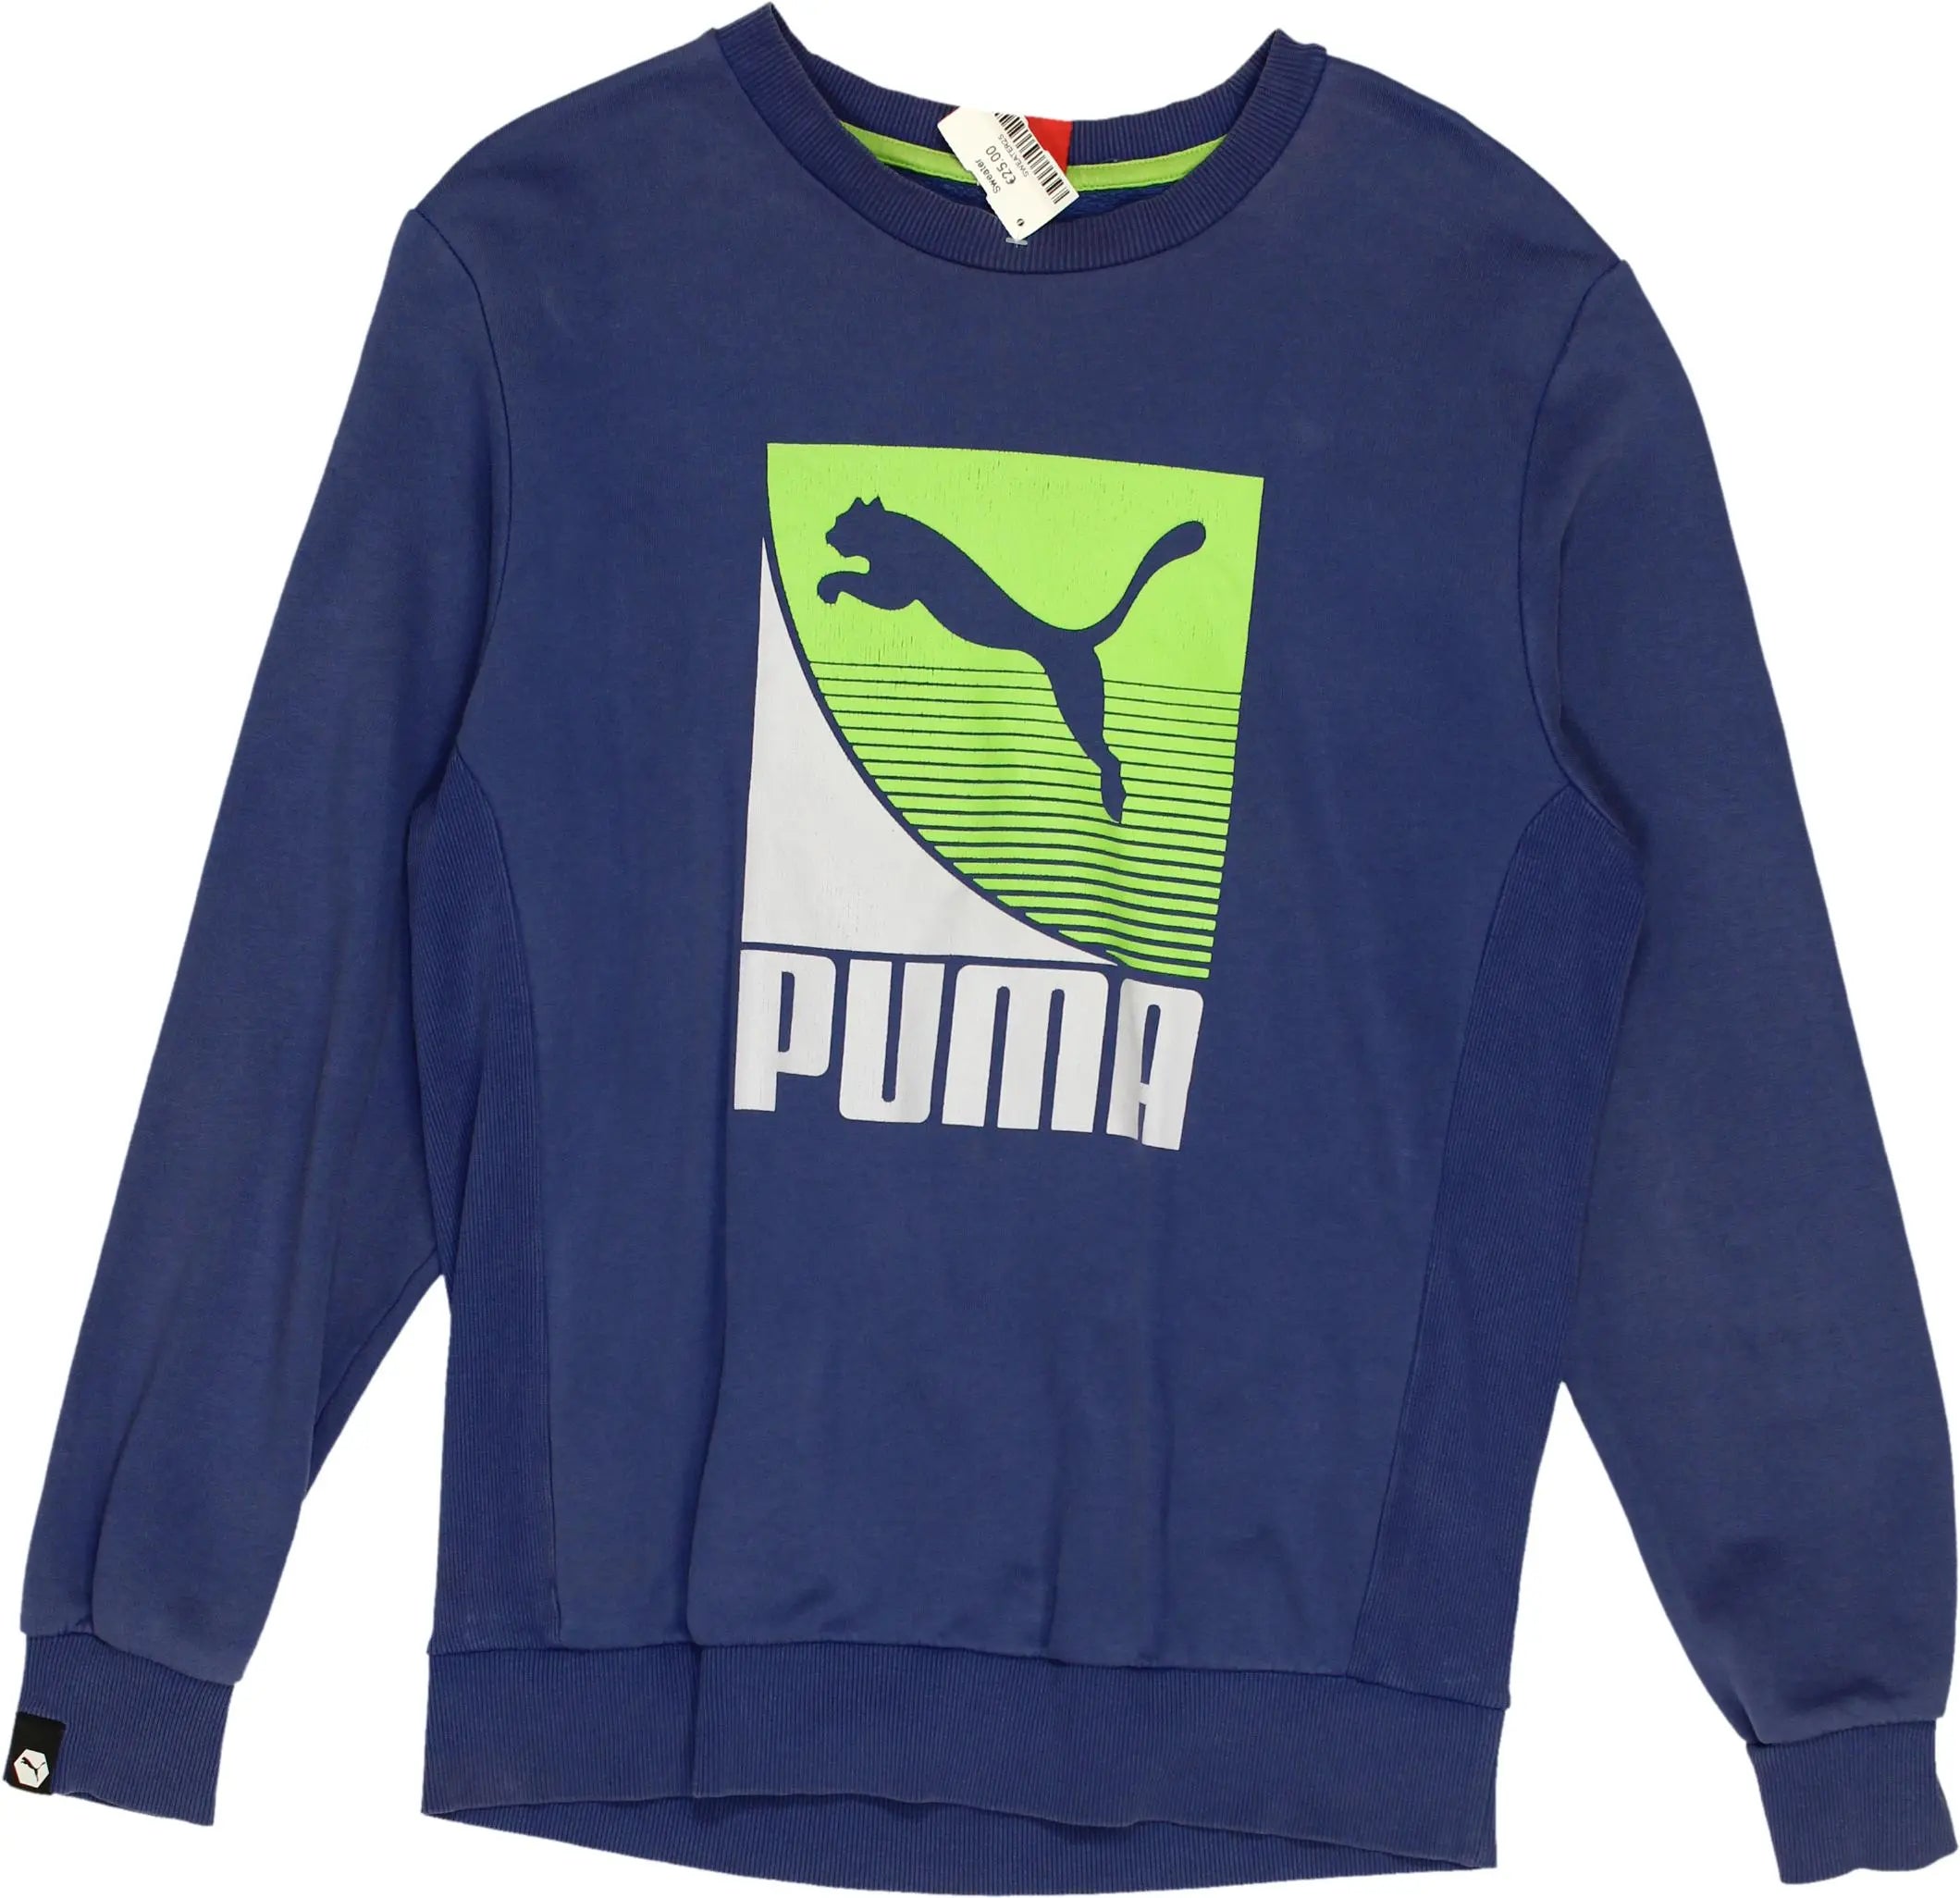 Puma - Blue Puma sweater- ThriftTale.com - Vintage and second handclothing